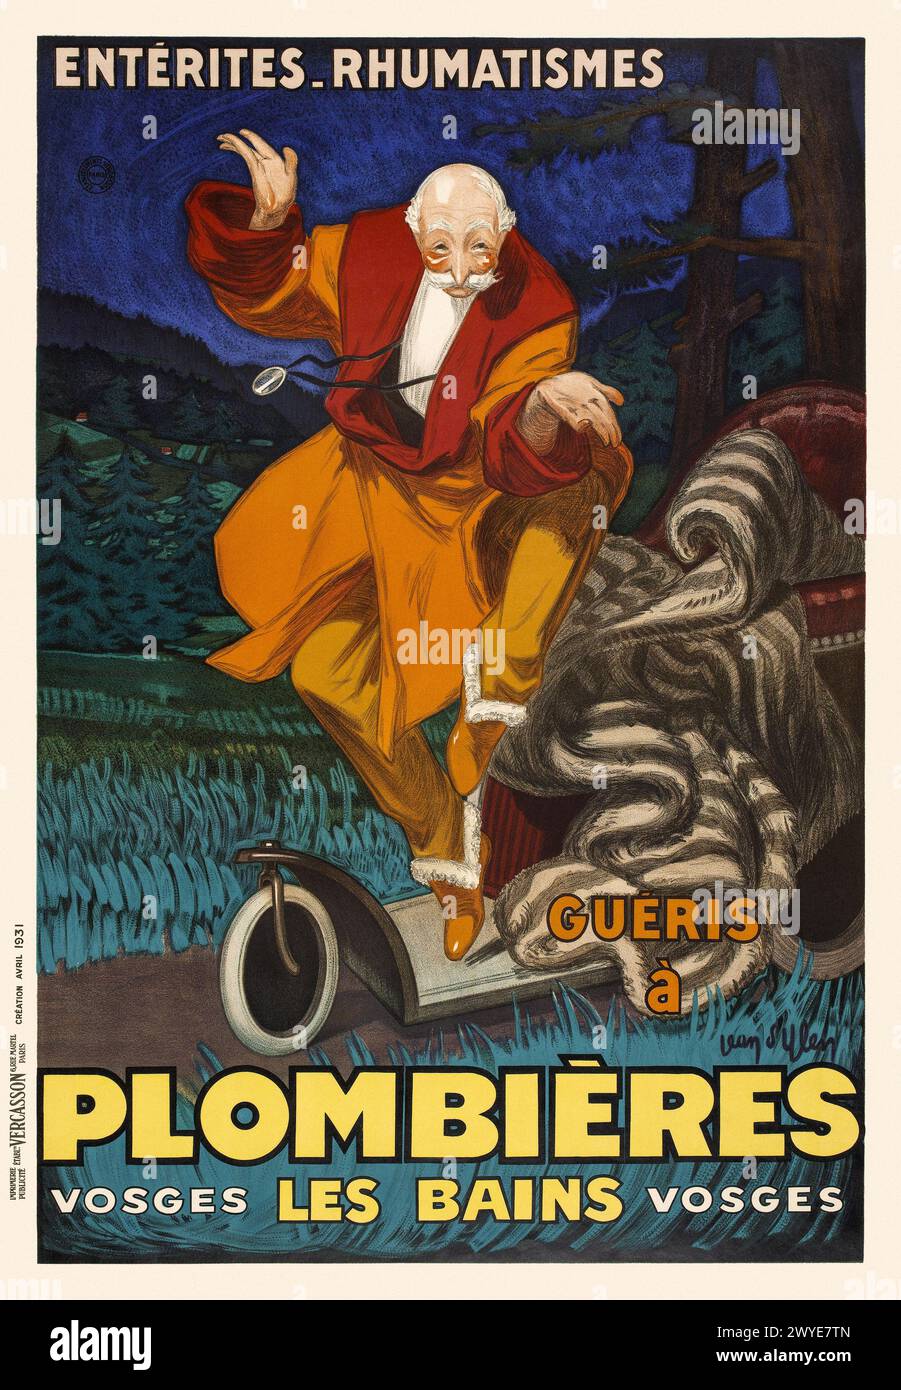 Entérites, rhumatismes guéris à Plombières les Bains by Jean d'Ylen (1886-1938). Poster published in 1931 in France. Stock Photo